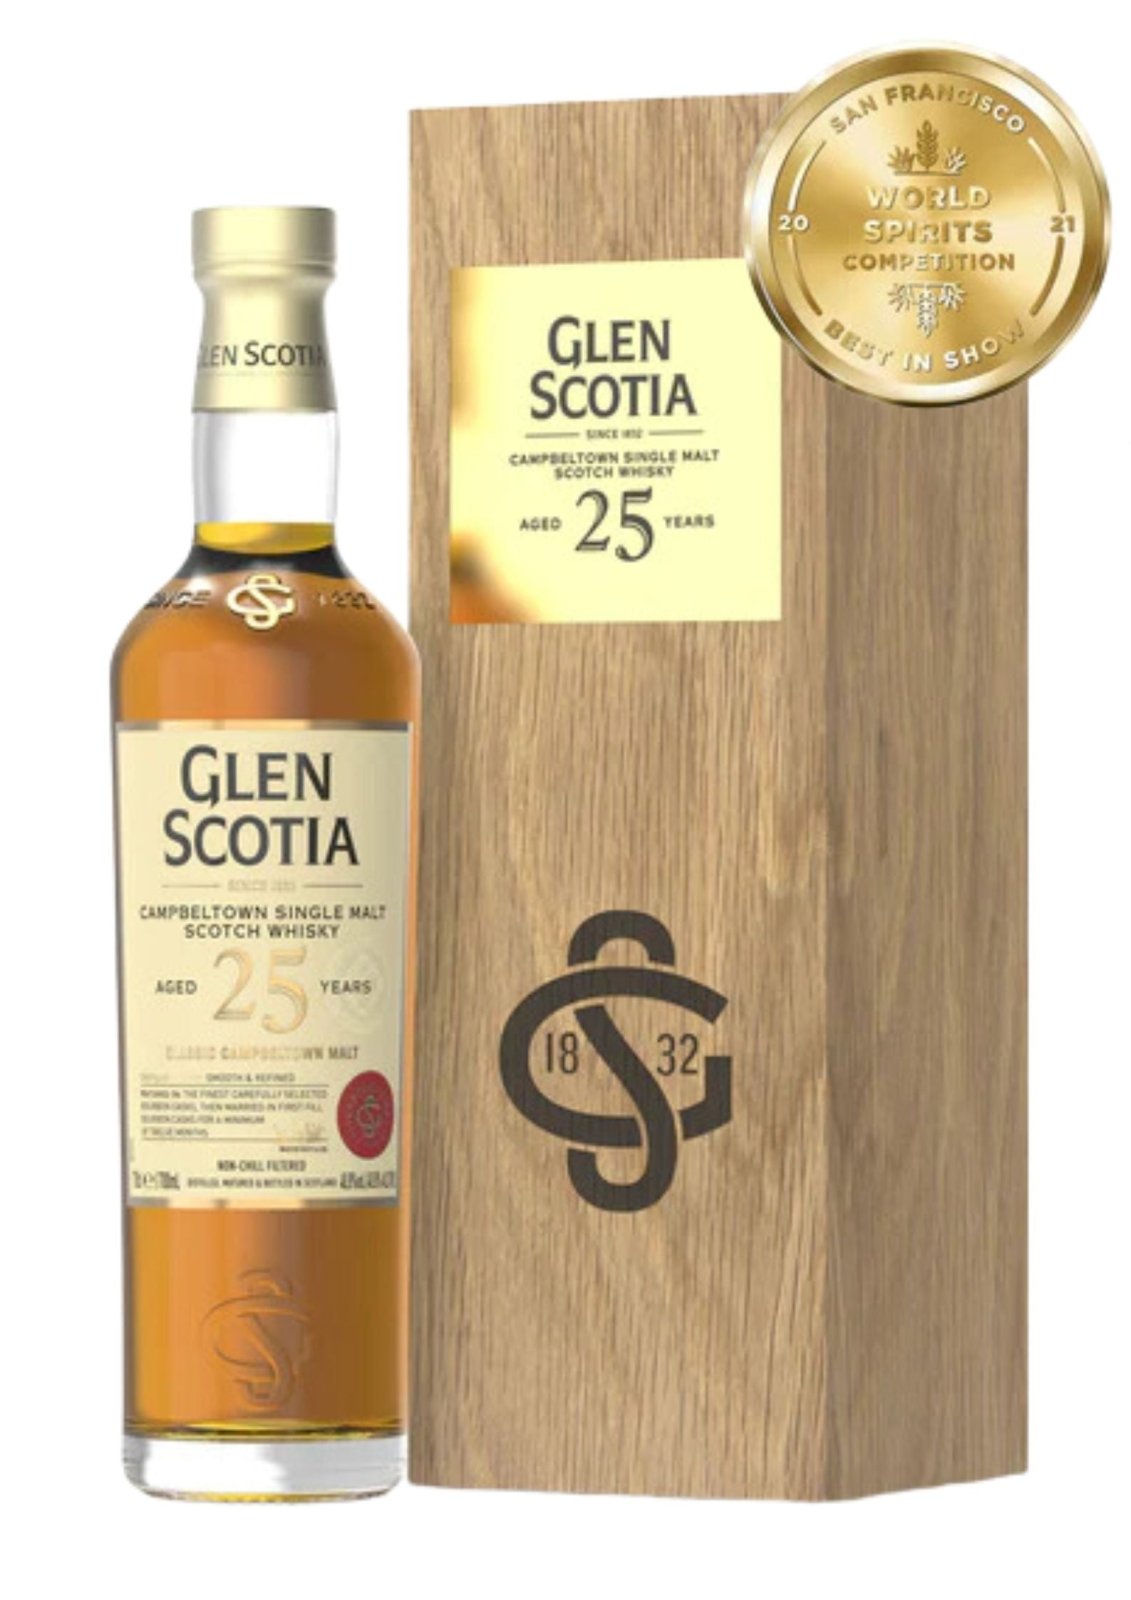 Bottle of Glen Scotia 25-Year-Old Campbeltown Single Malt Scotch Whisky, 48.8%